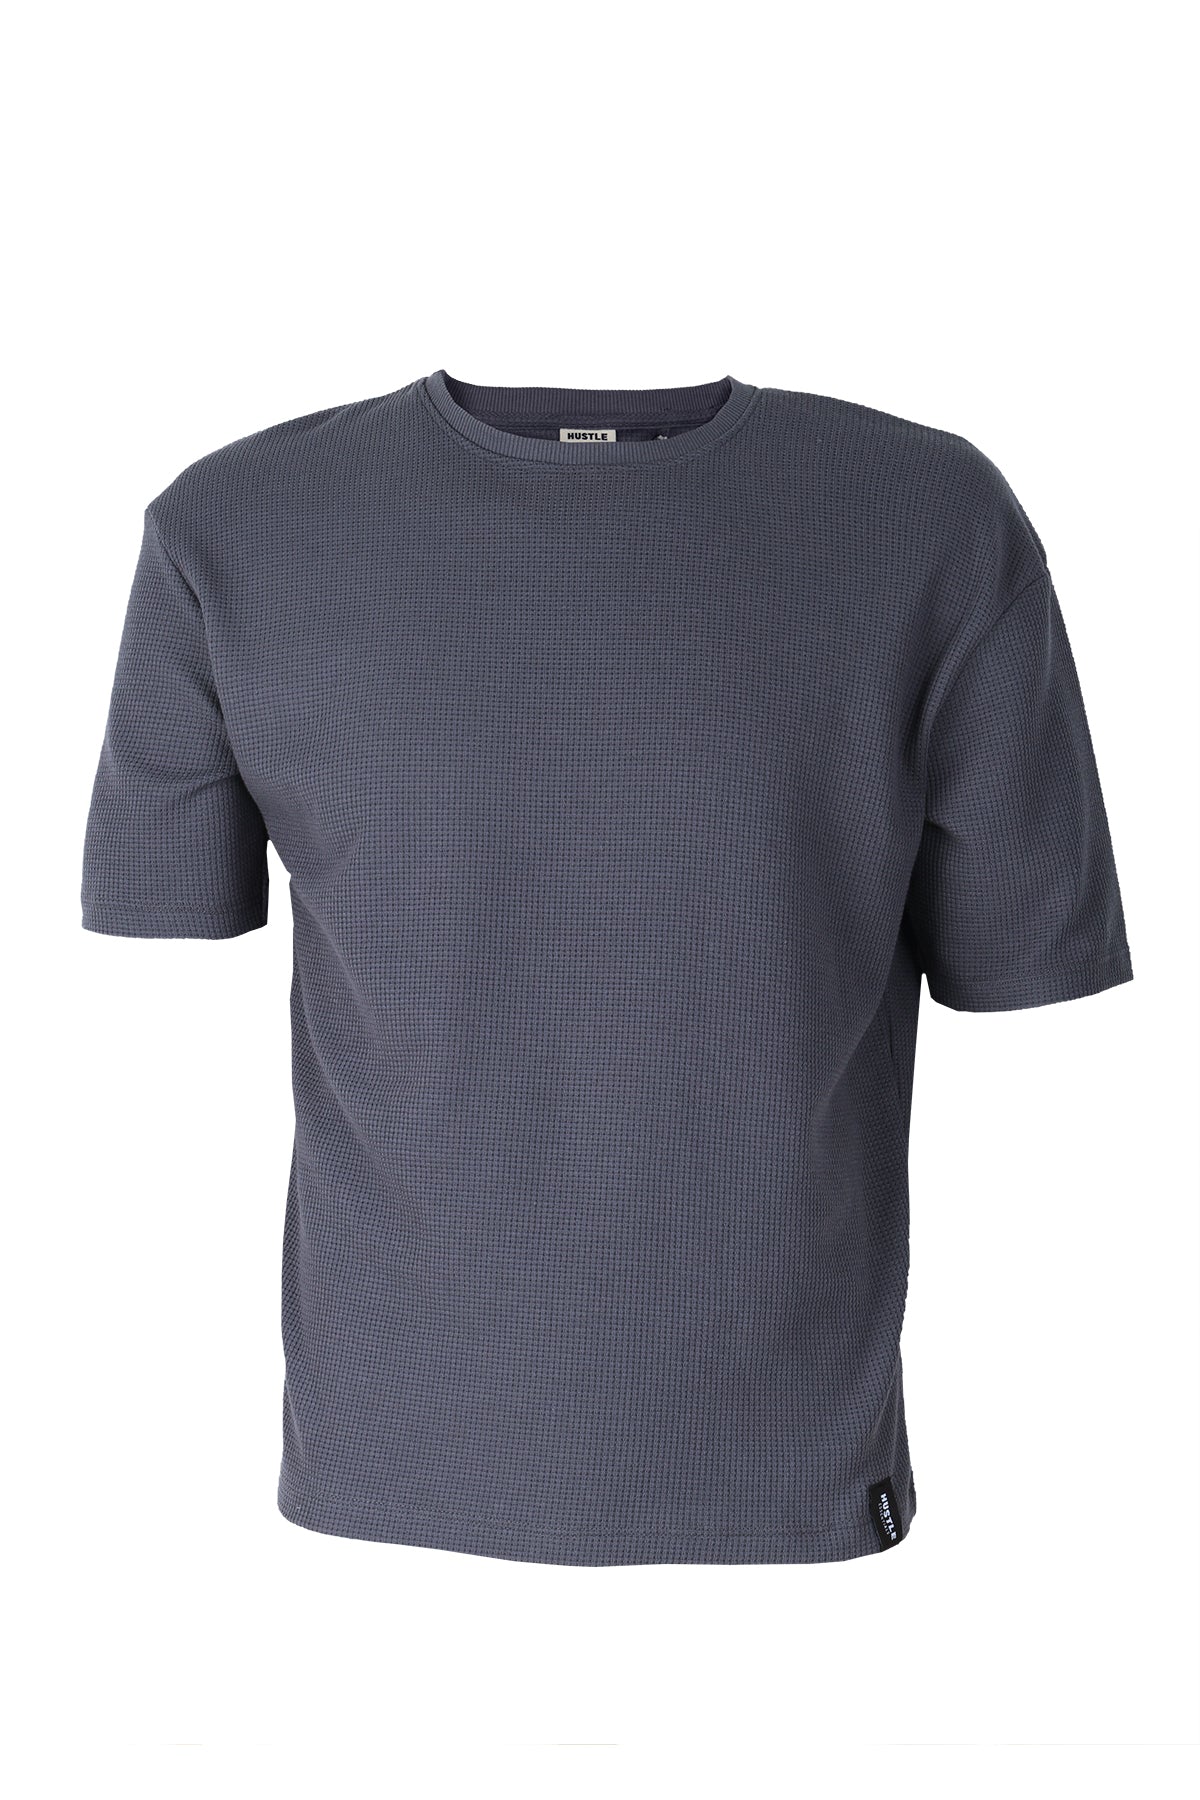 Hustle Men's Short Sleeve Casual T-Shirt